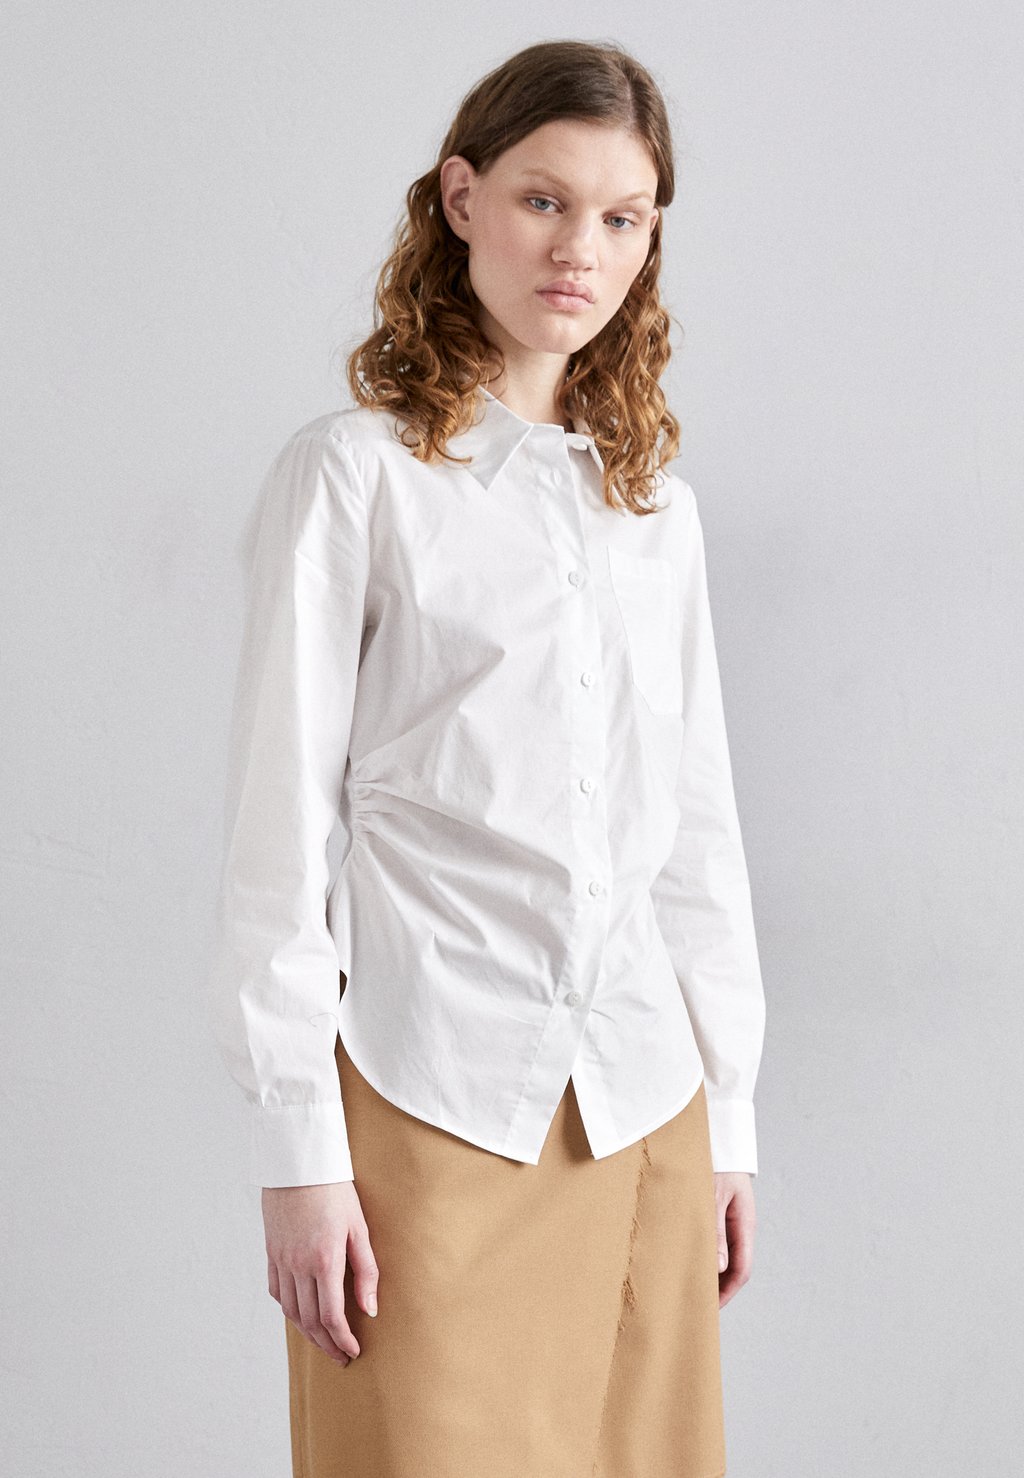 Блузка на пуговицах MARIA Baum und Pferdgarten, белый блузка рубашка молли baum und pferdgarten белый